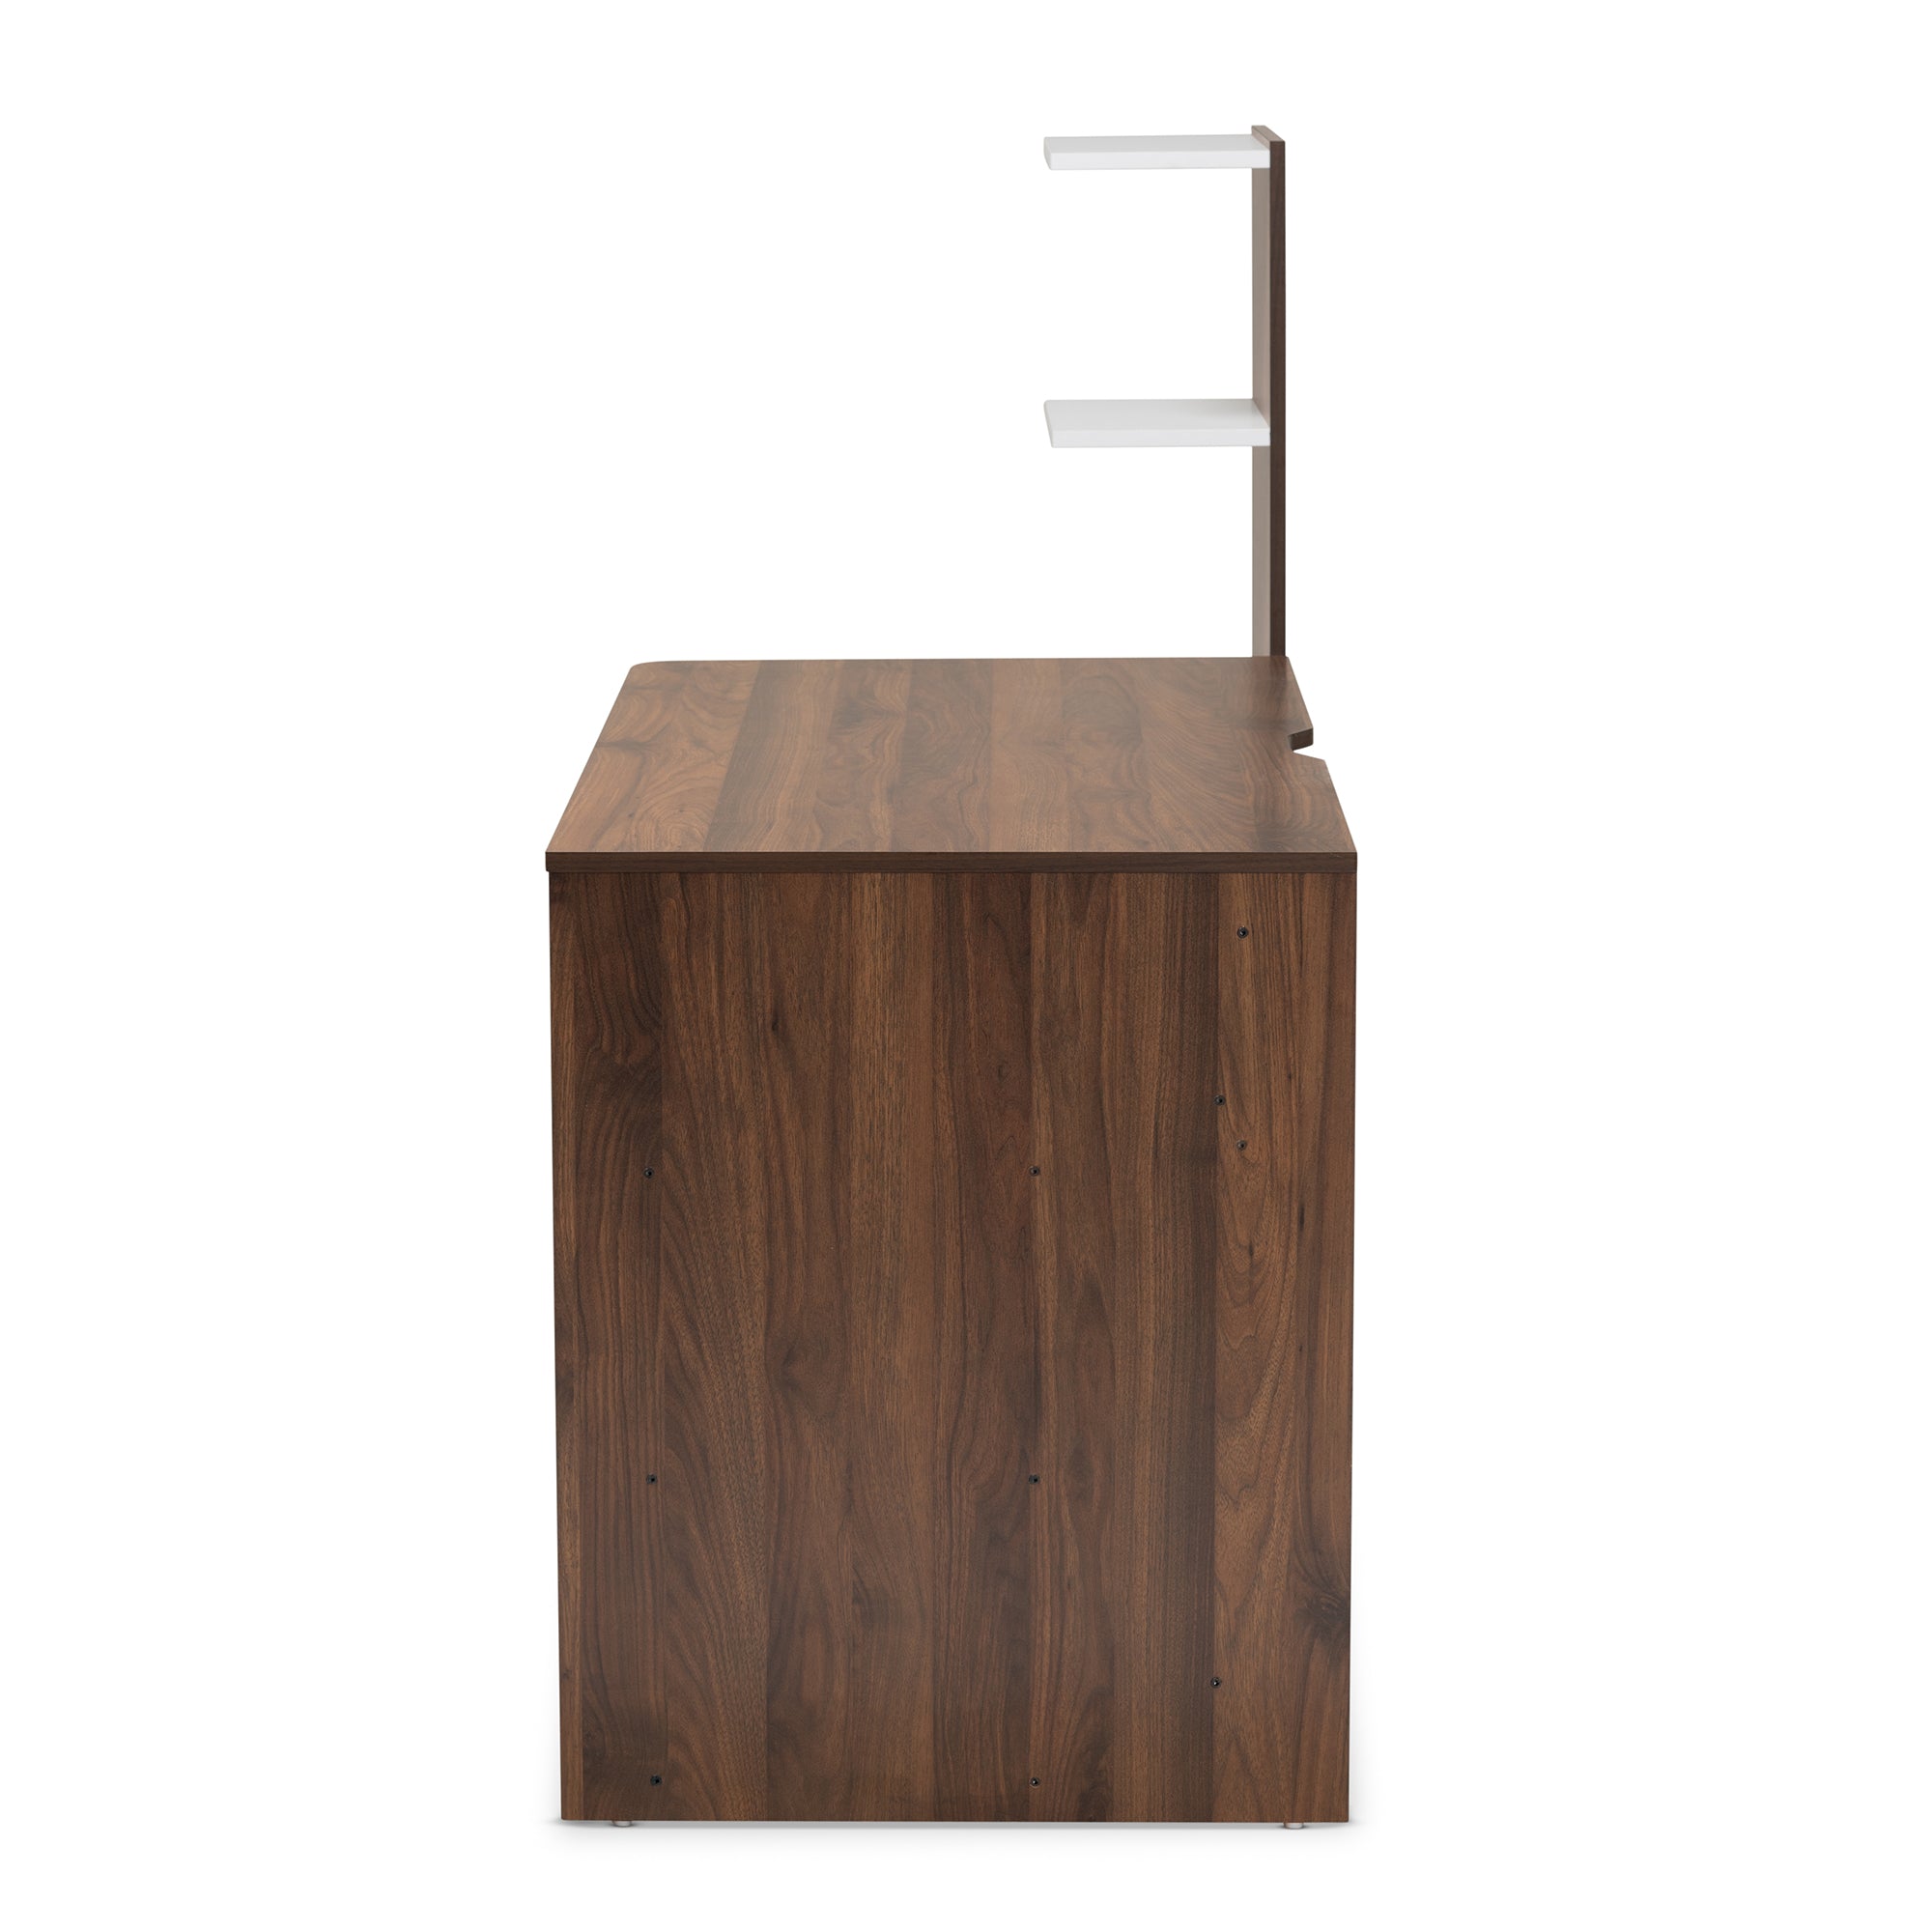 Tobias Mid-Century Desk with Shelves-Desk-Baxton Studio - WI-Wall2Wall Furnishings